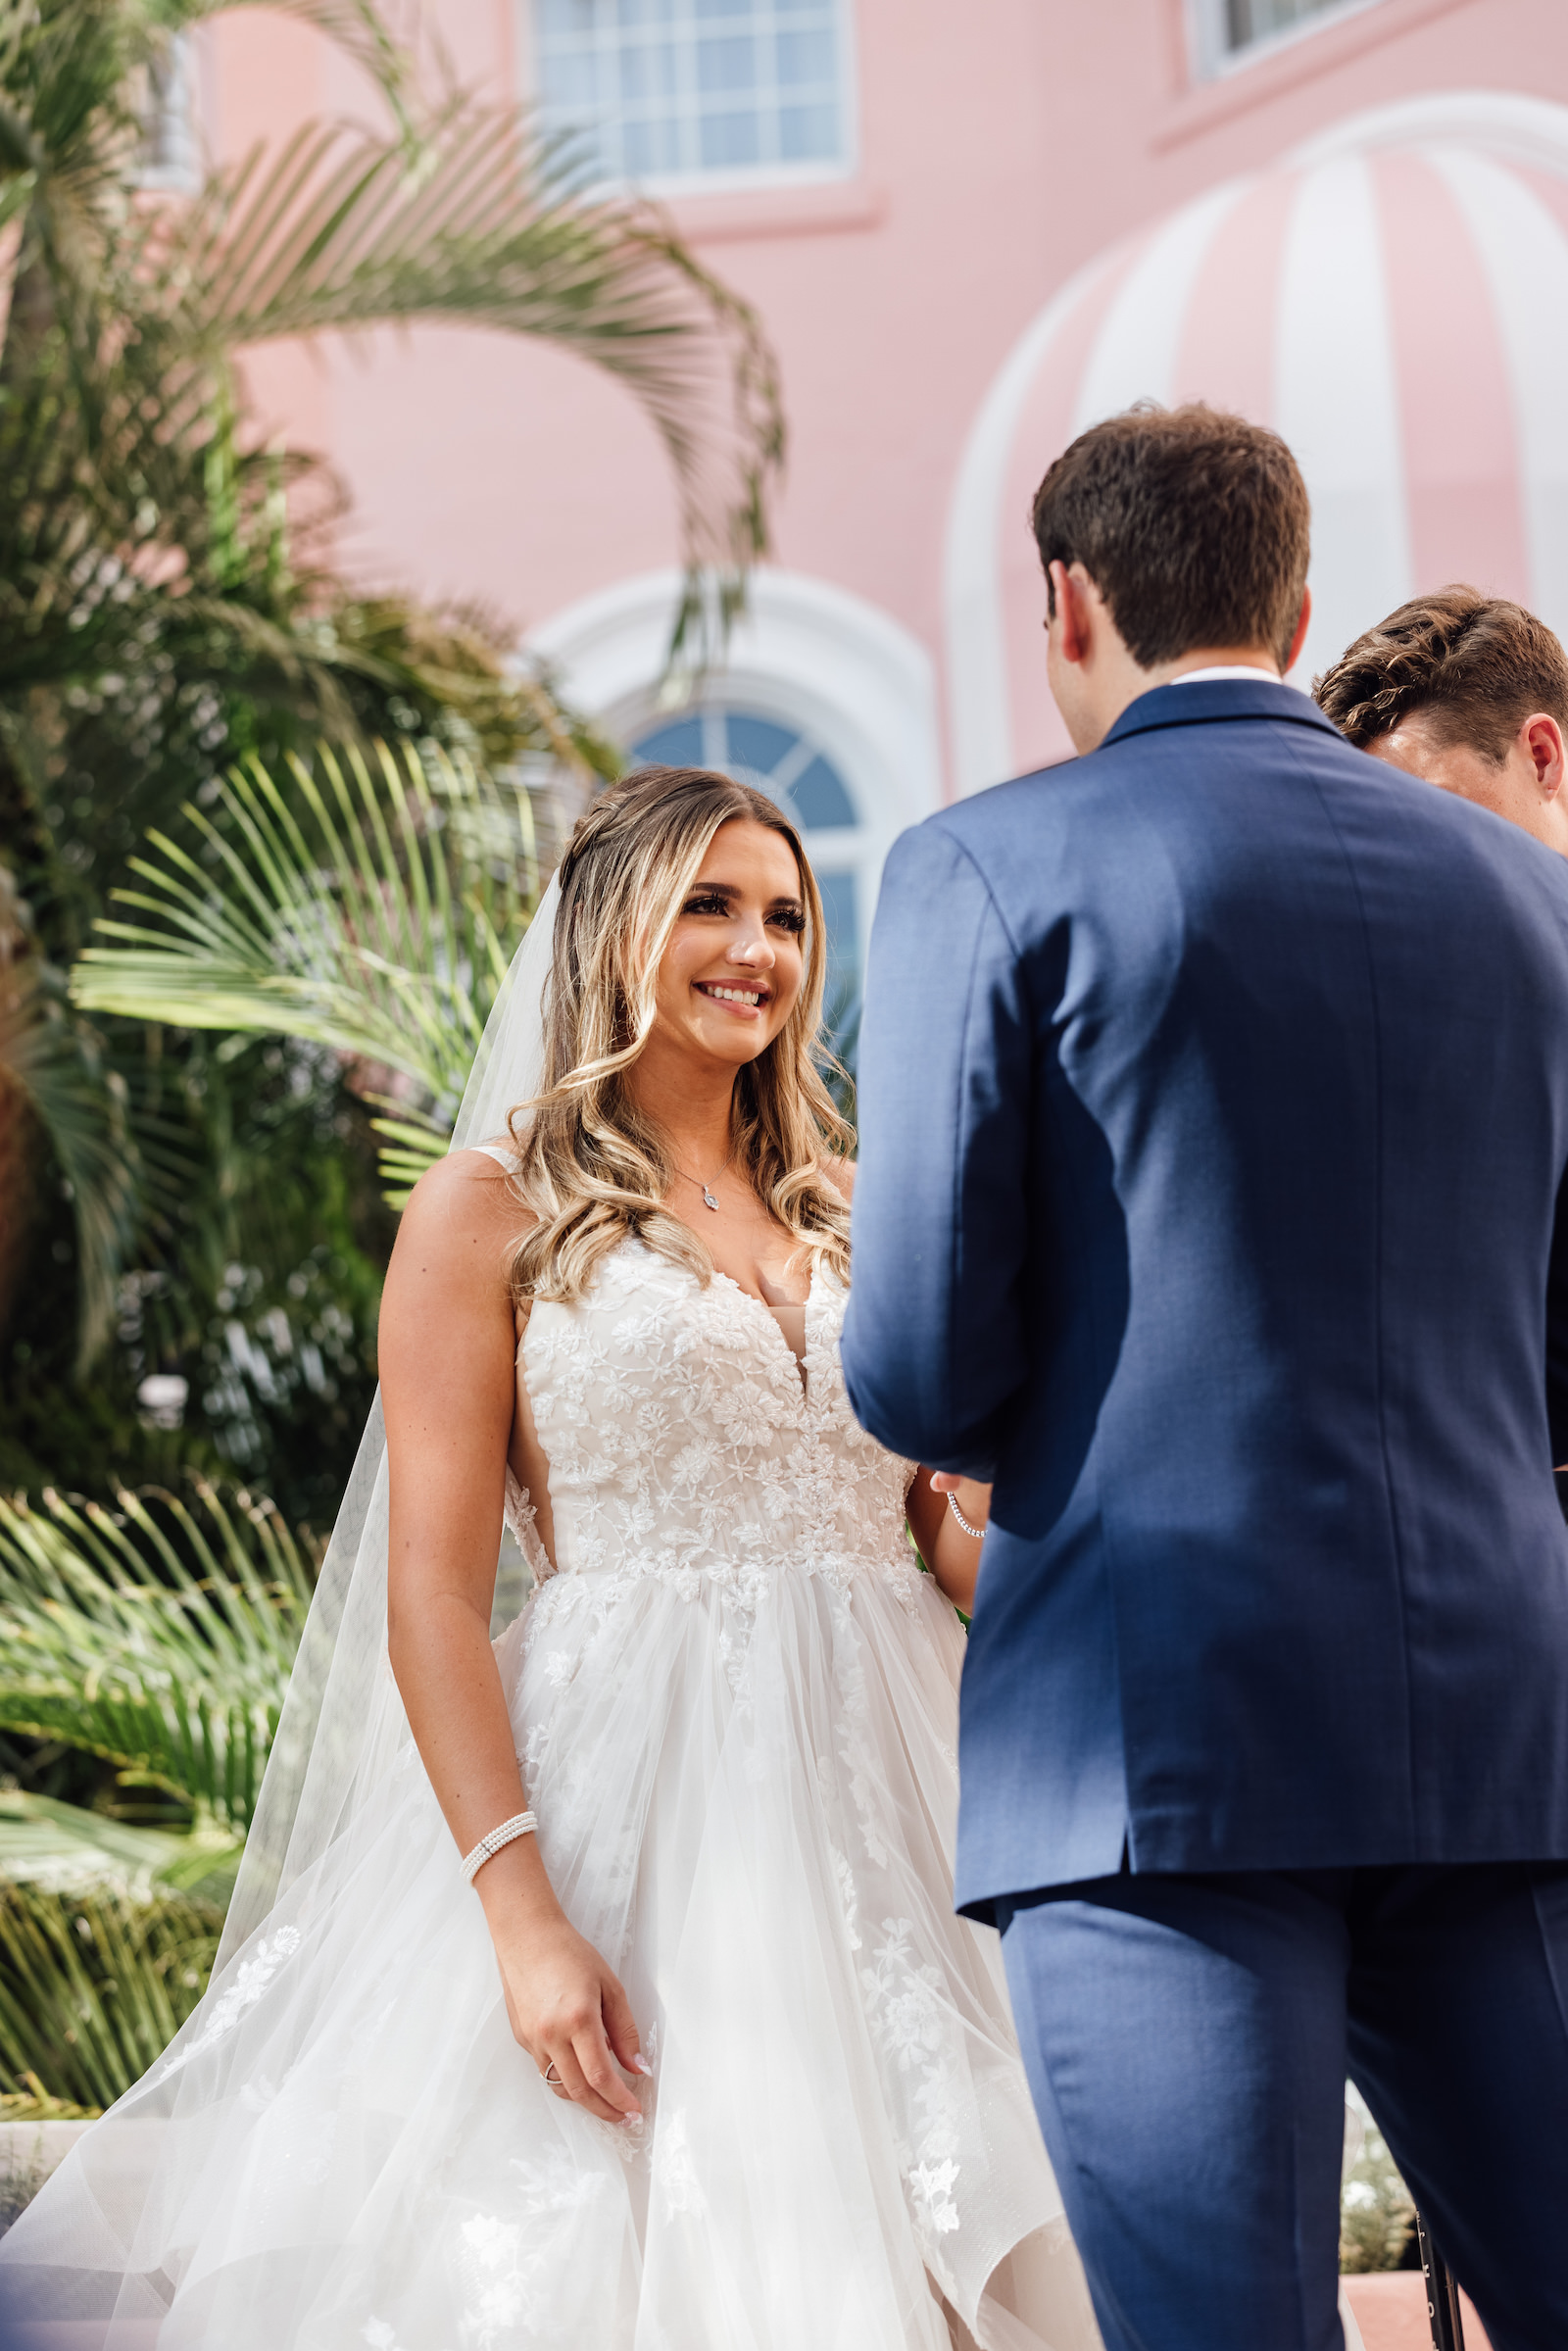 Bride and Groom Exchange Vows Wedding Portrait | Outdoor Beach Hotel Wedding Ceremony | Tampa Wedding Venue the Don Cesar